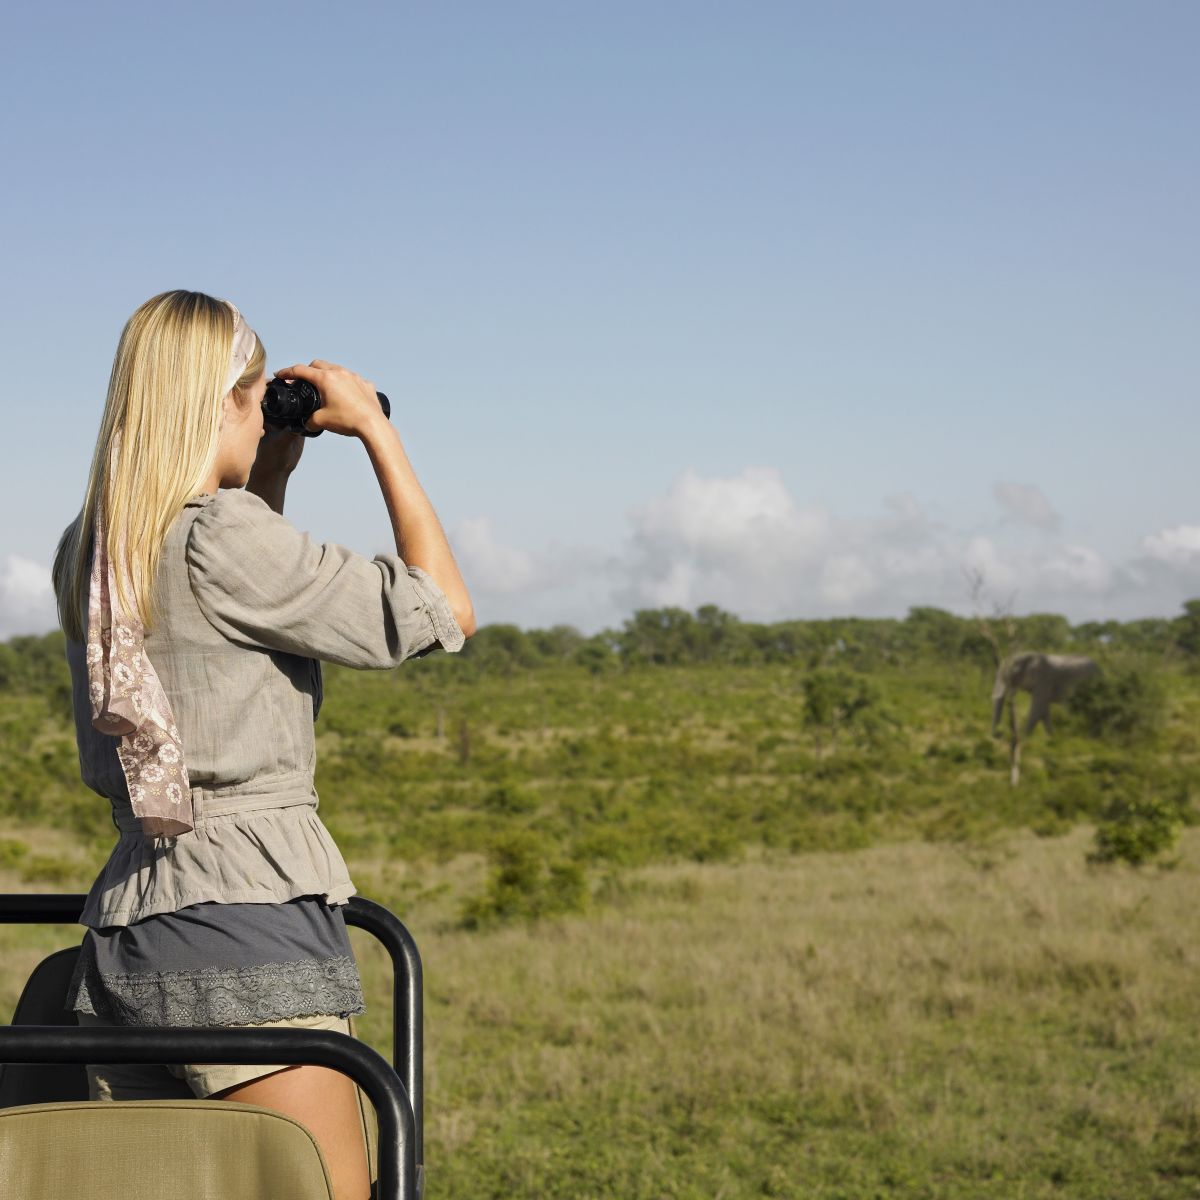 Pur. Woman on safari looking at elephants through binoculars